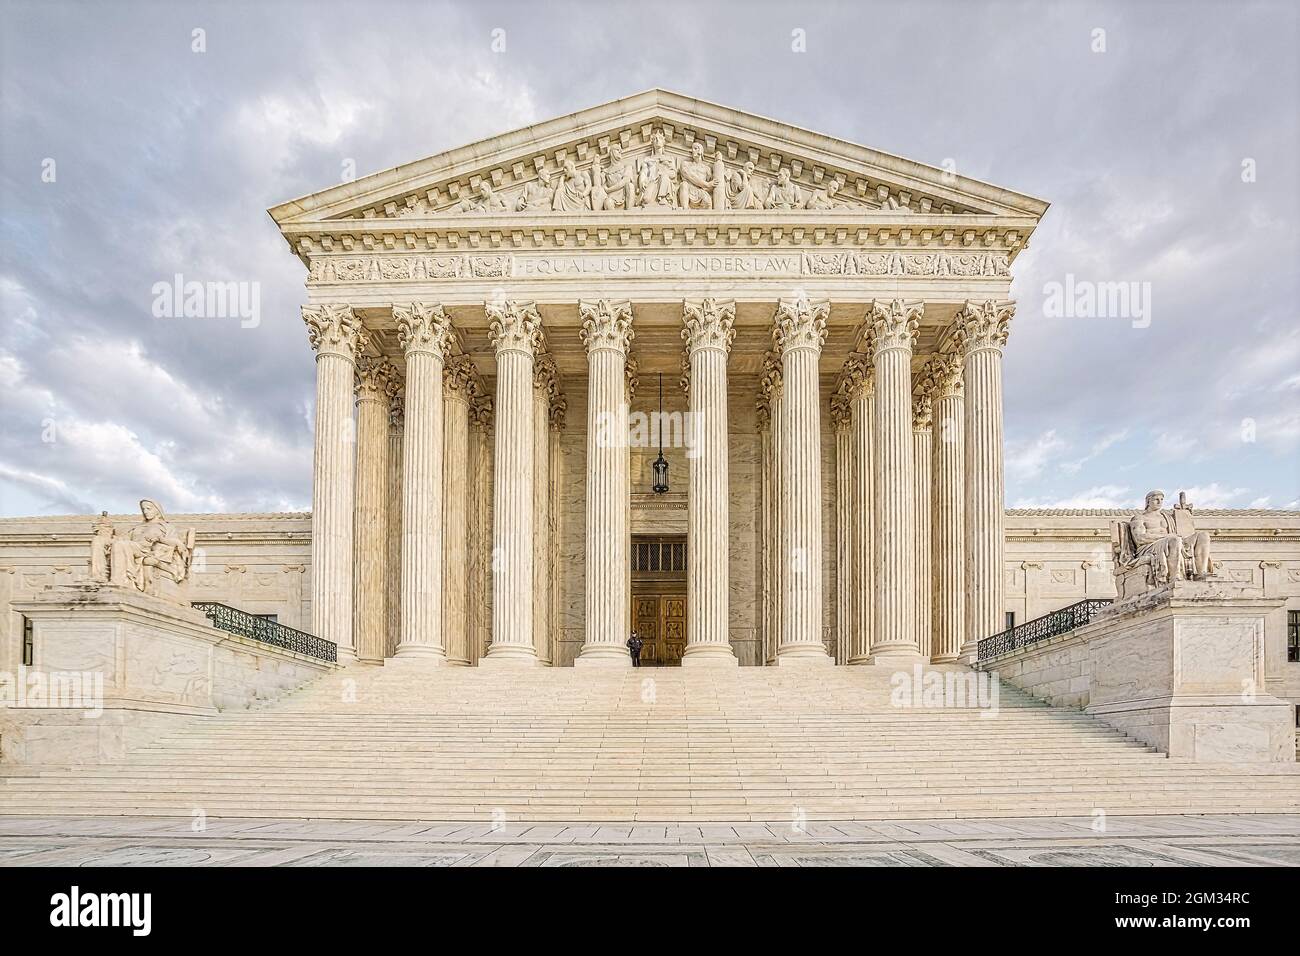 SCOTUS Equal Justice - Oberster Gerichtshof der Vereinigten Staaten in Washington DC. Das höchste Bundesgericht der Vereinigten Staaten mit seinem neoklassizistischen Bogen Stockfoto